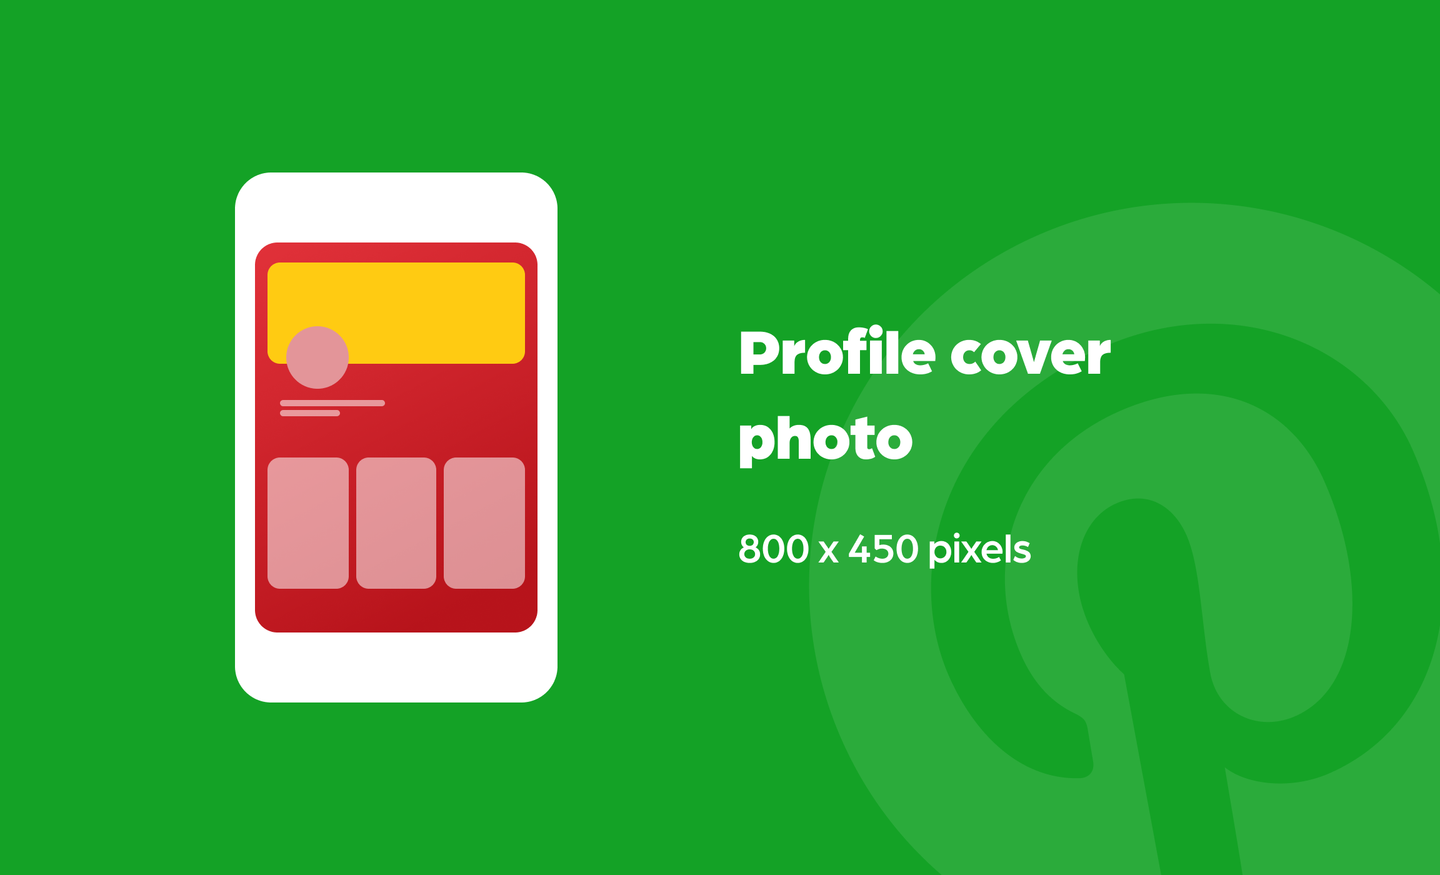 Pinterest profile cover photo size